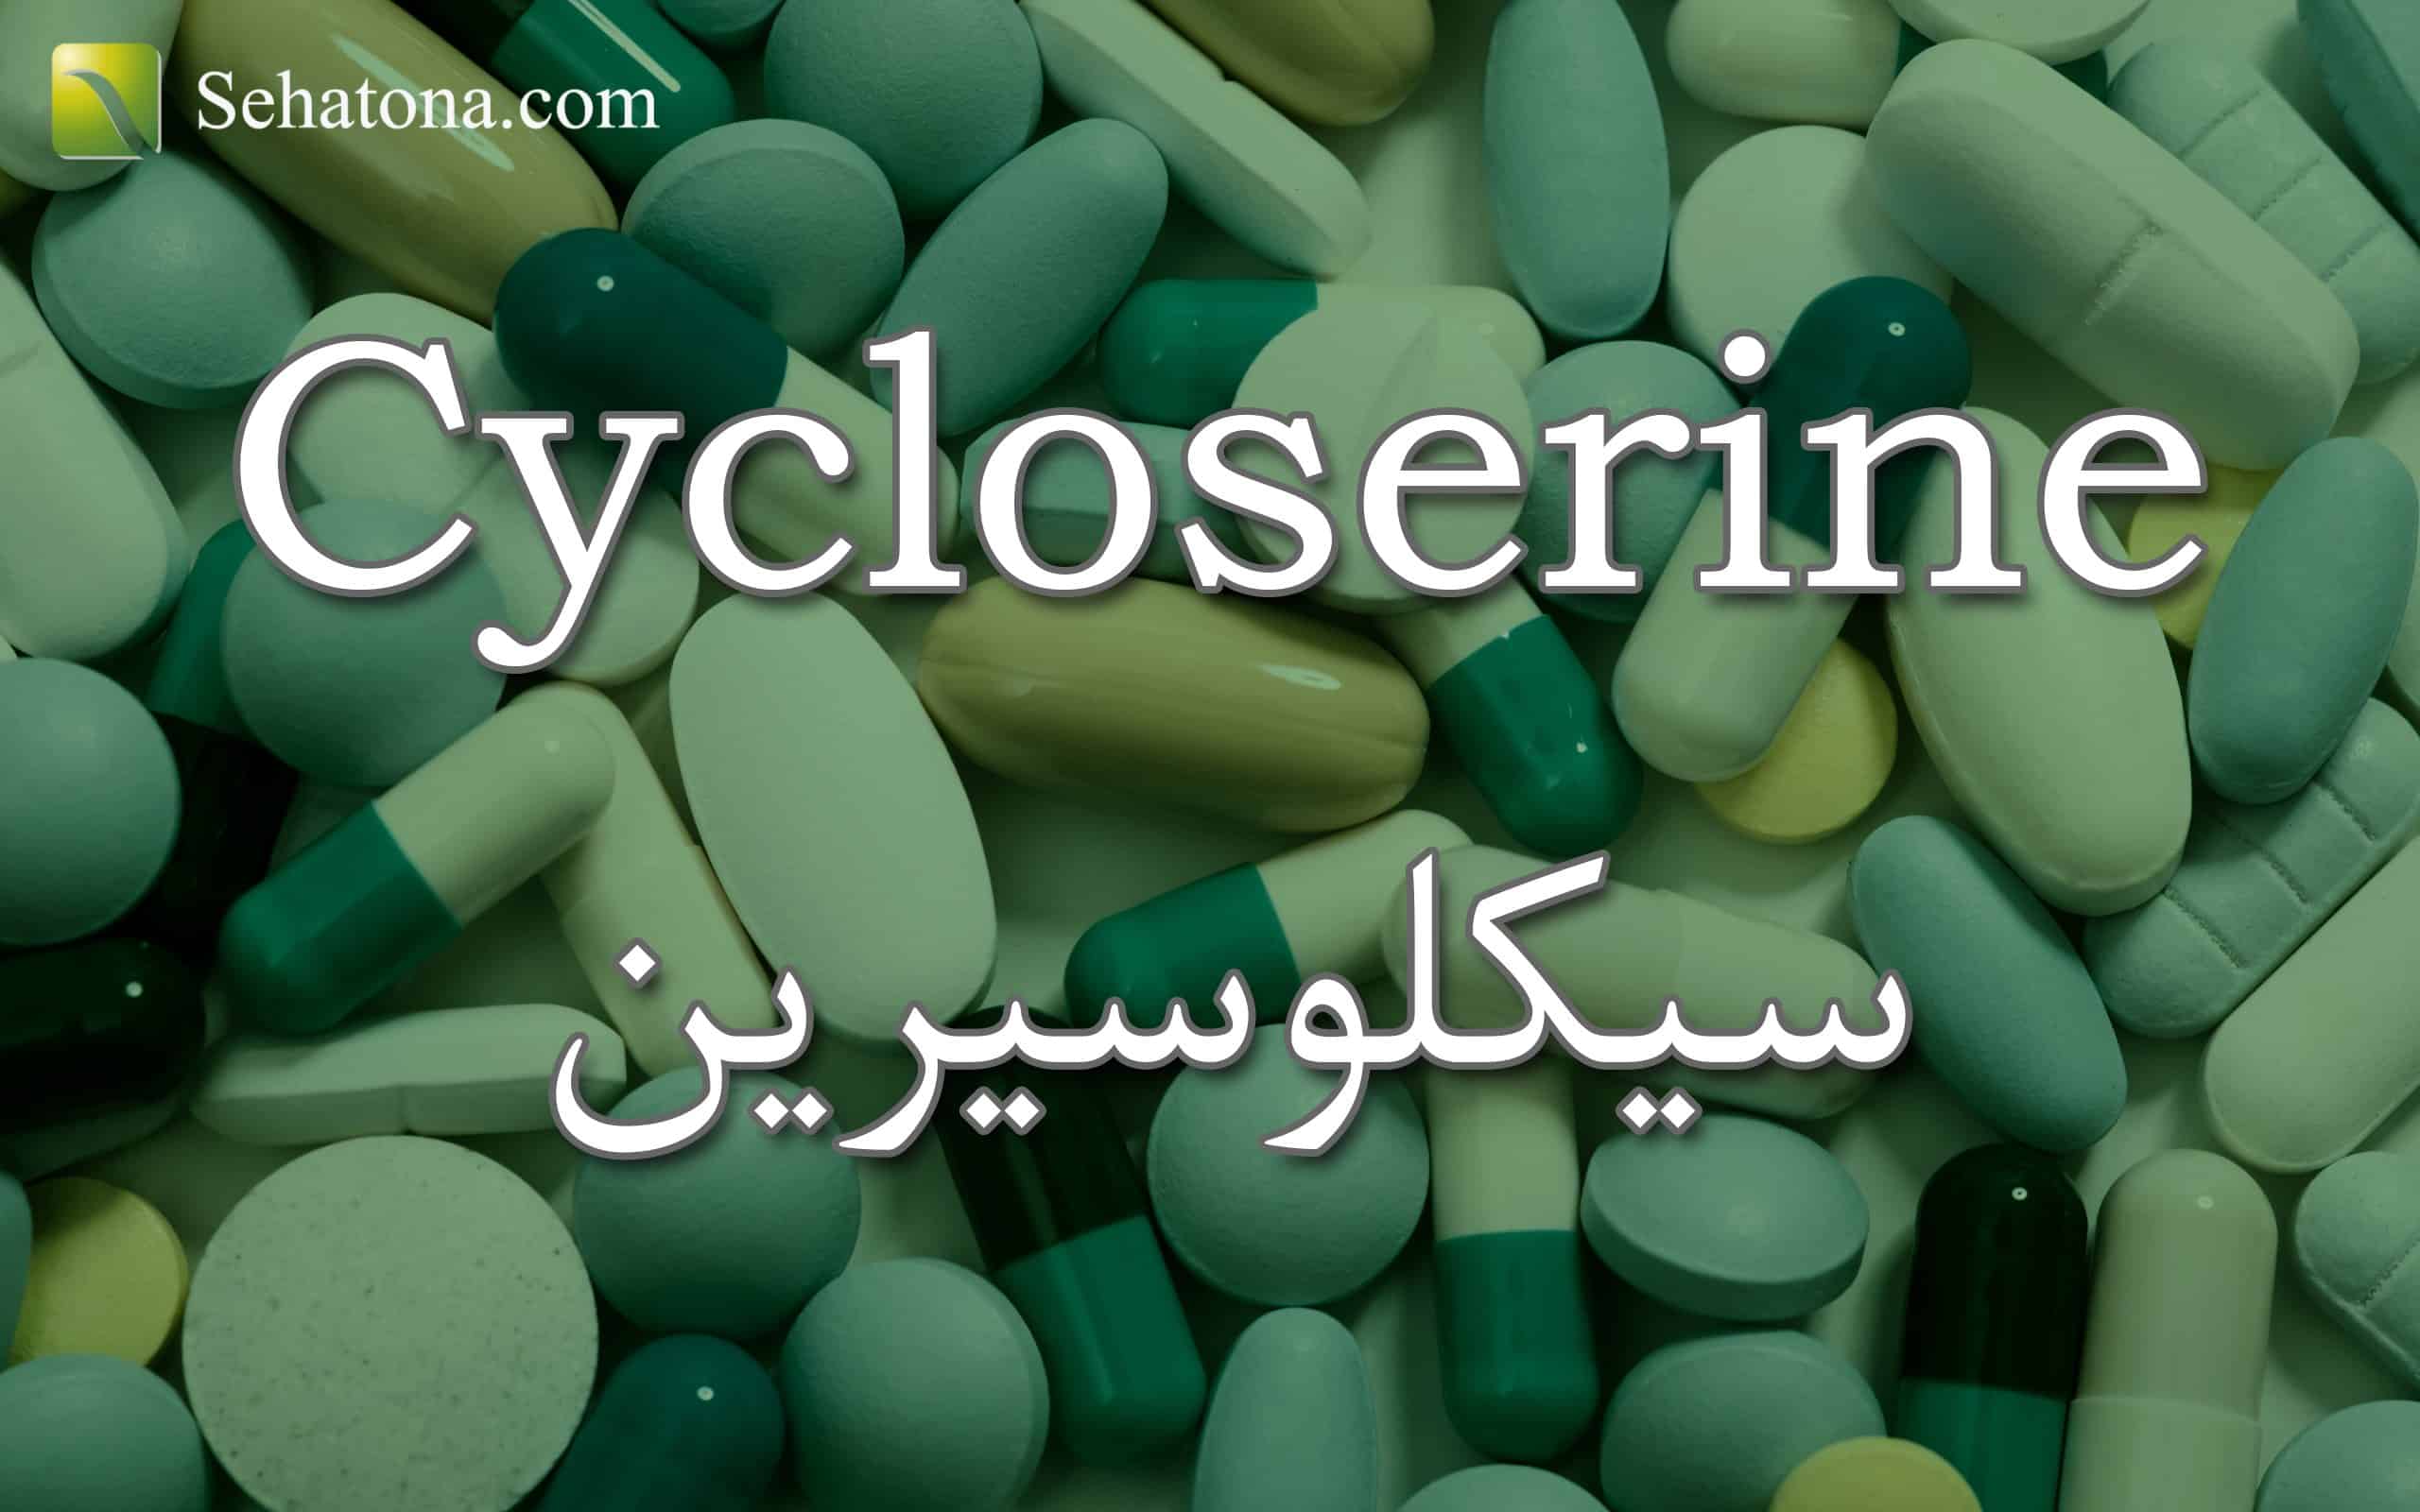 Cycloserine